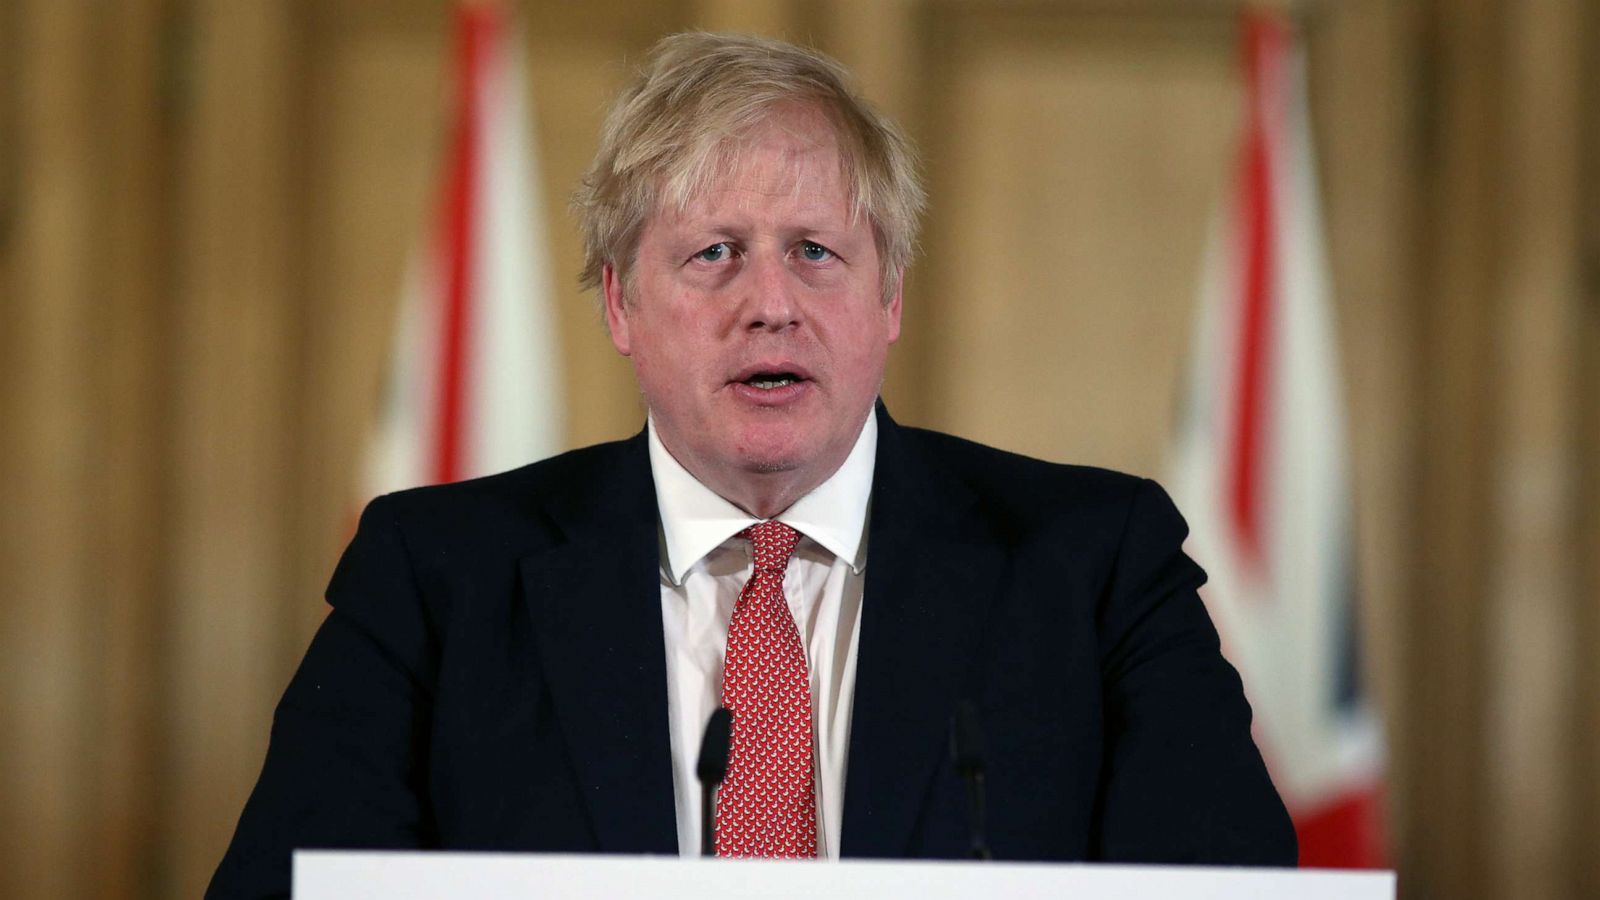 UK Prime Minister Boris Johnson and health minister test positive for coronavirus - ABC News